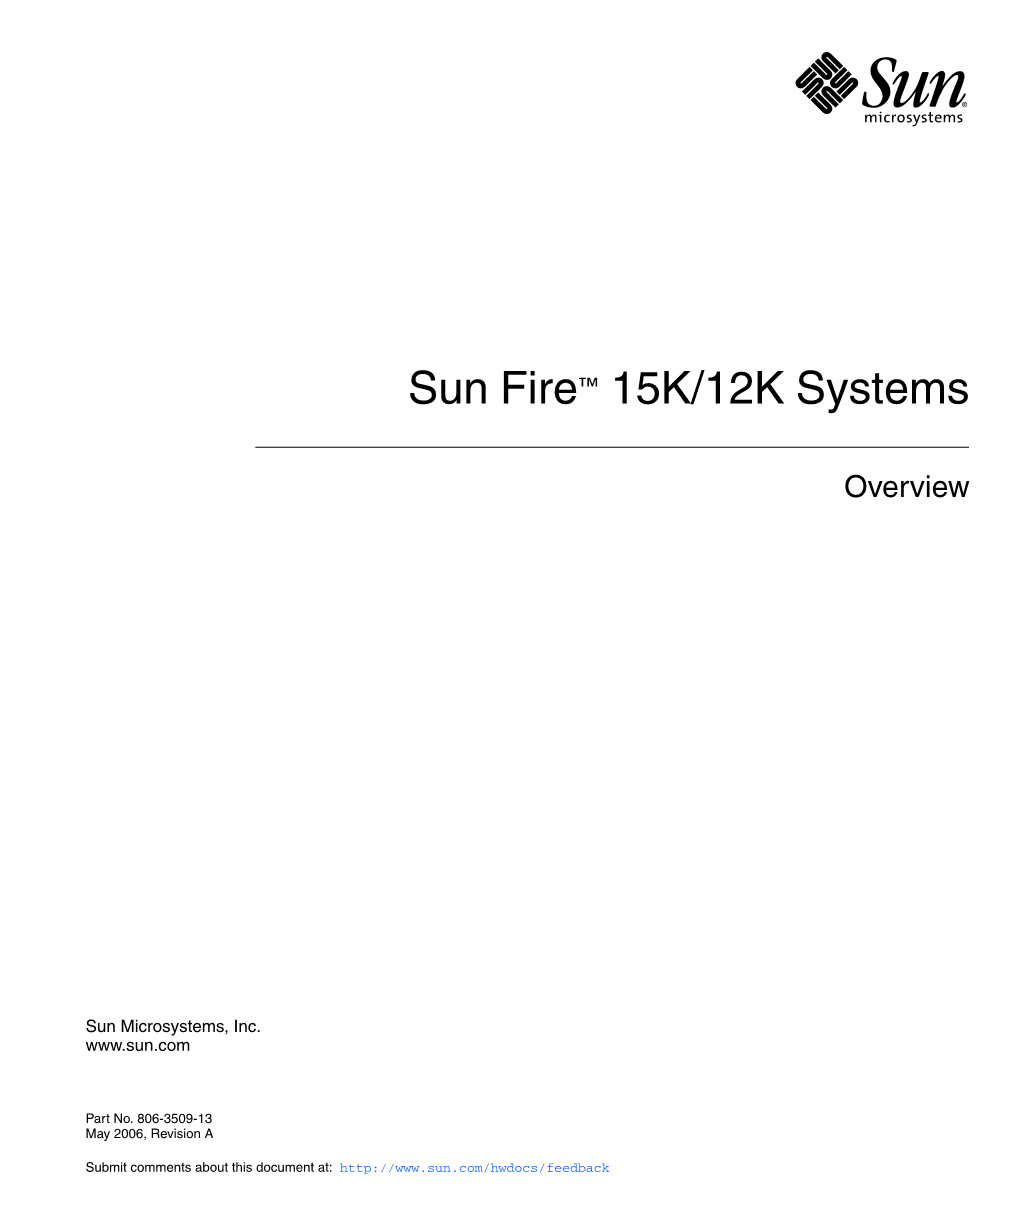 Sun Fire 15K/12K Systems Overview